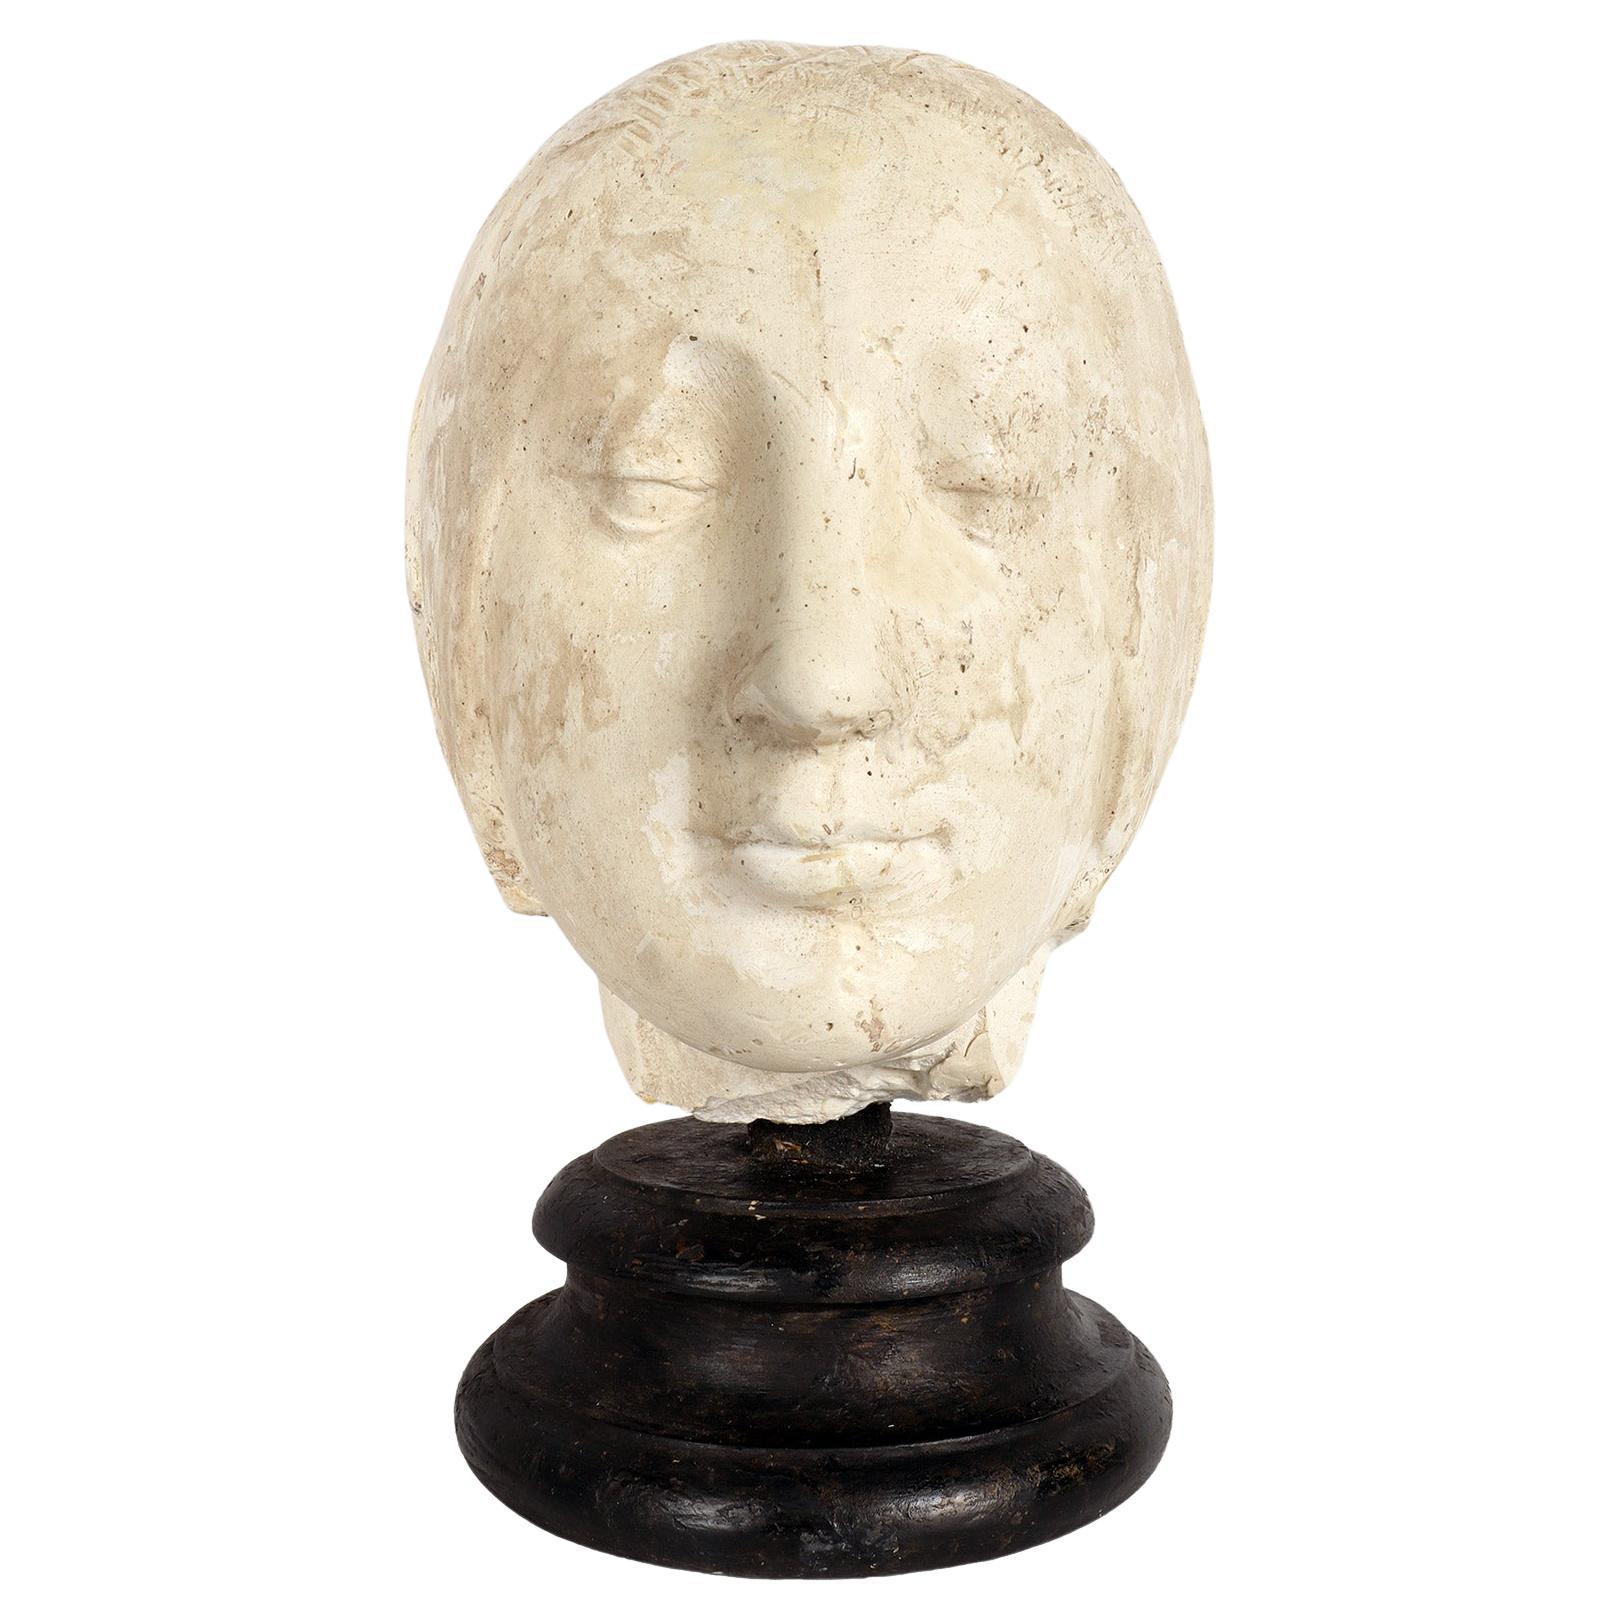 An academic cast depicting Eleonora D’Aragona head, Italy 1890. For Sale